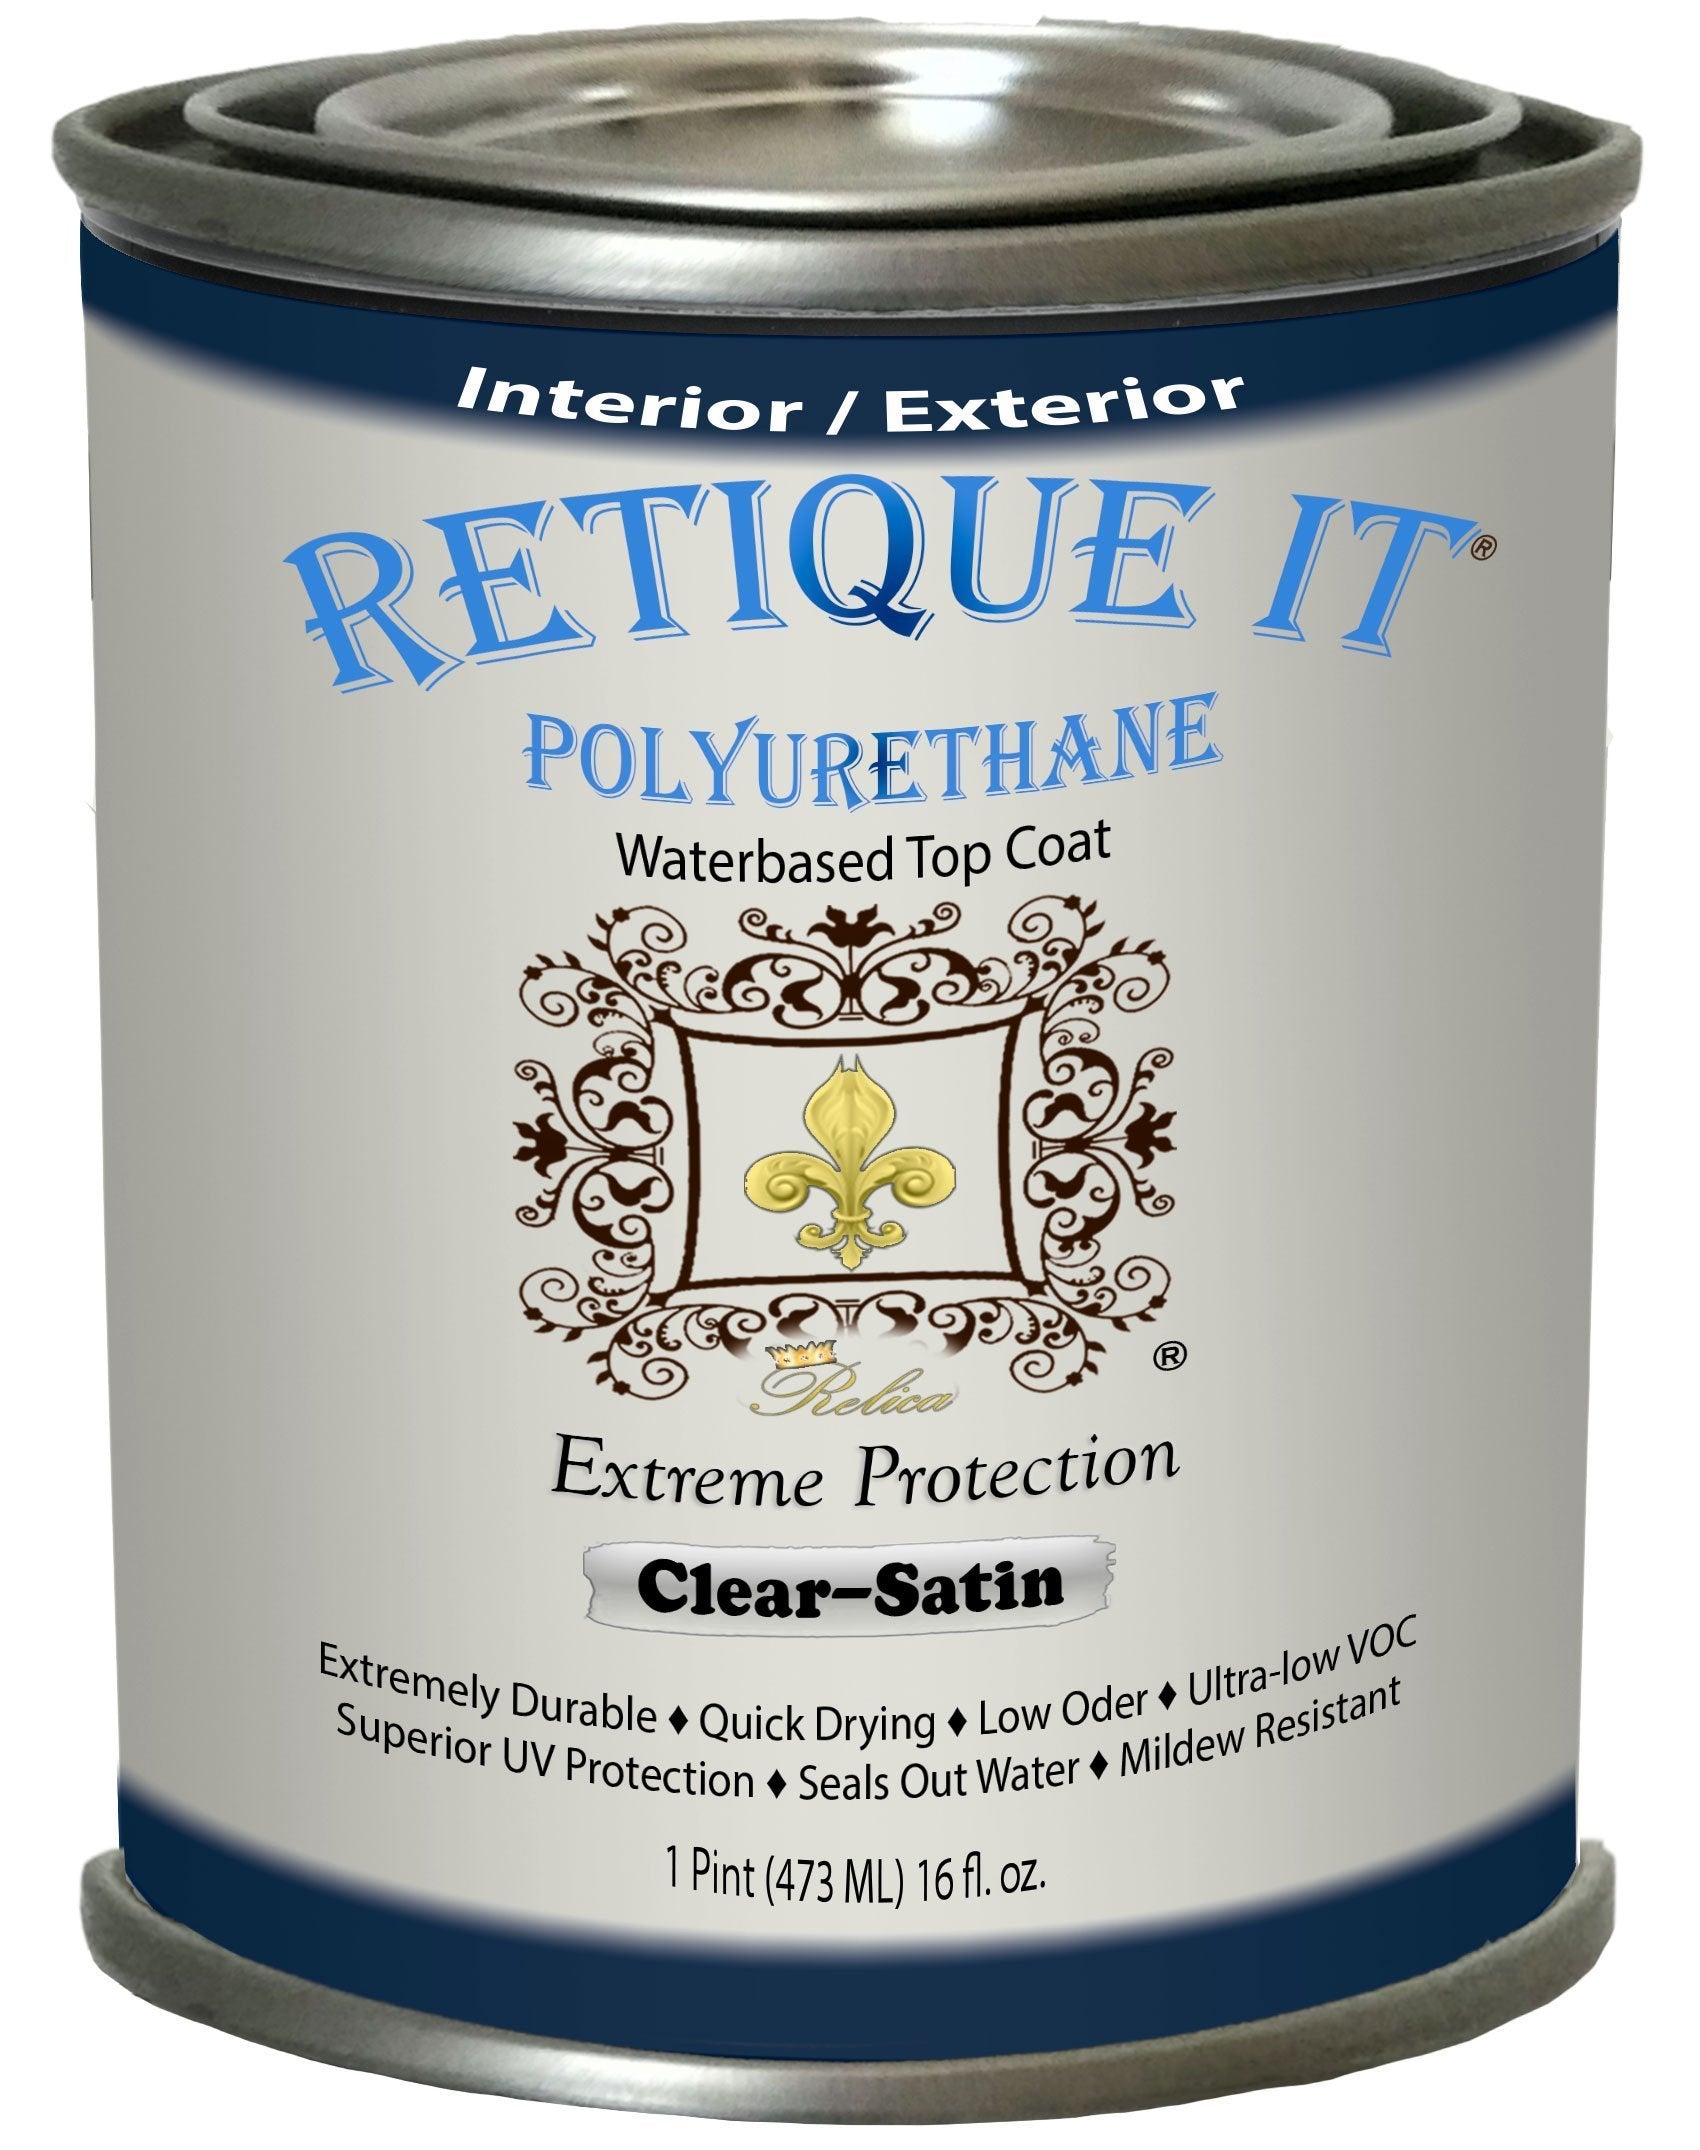 Retique It Waterbased Polyurethane (Wholesale)